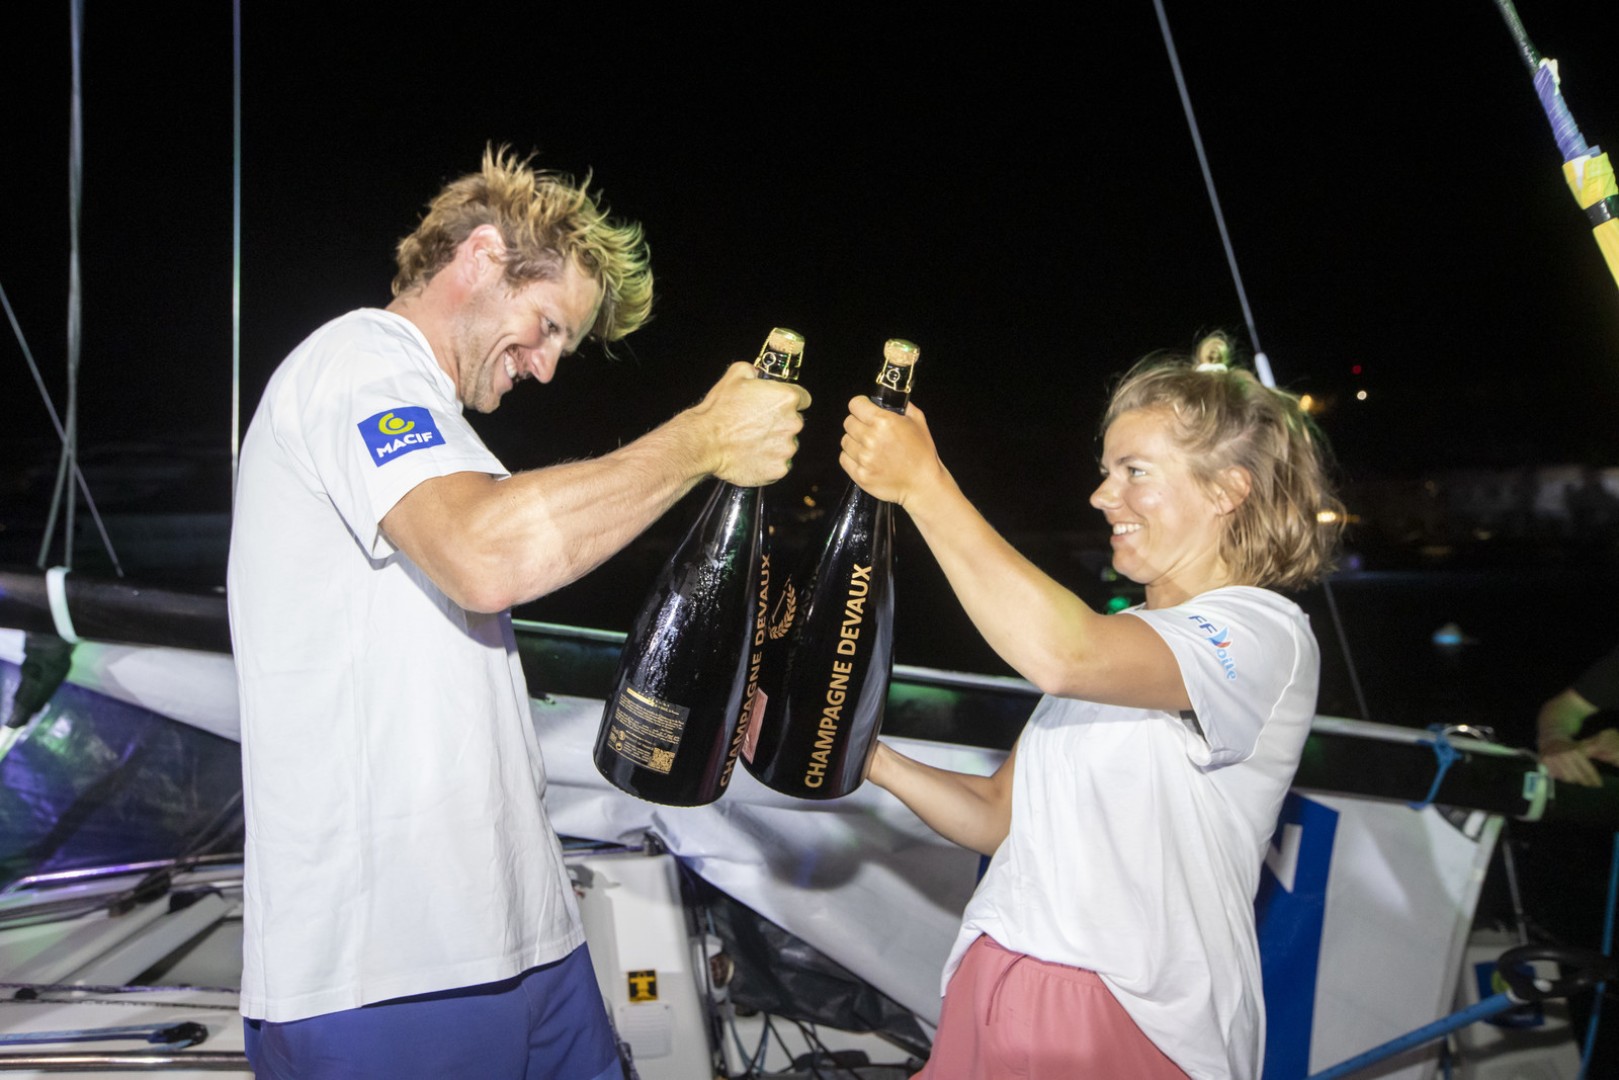 Lois Berrehar and Charlotte Yven, on Skipper Macif win the Transat Paprec. Photo: Alexis Courcoux